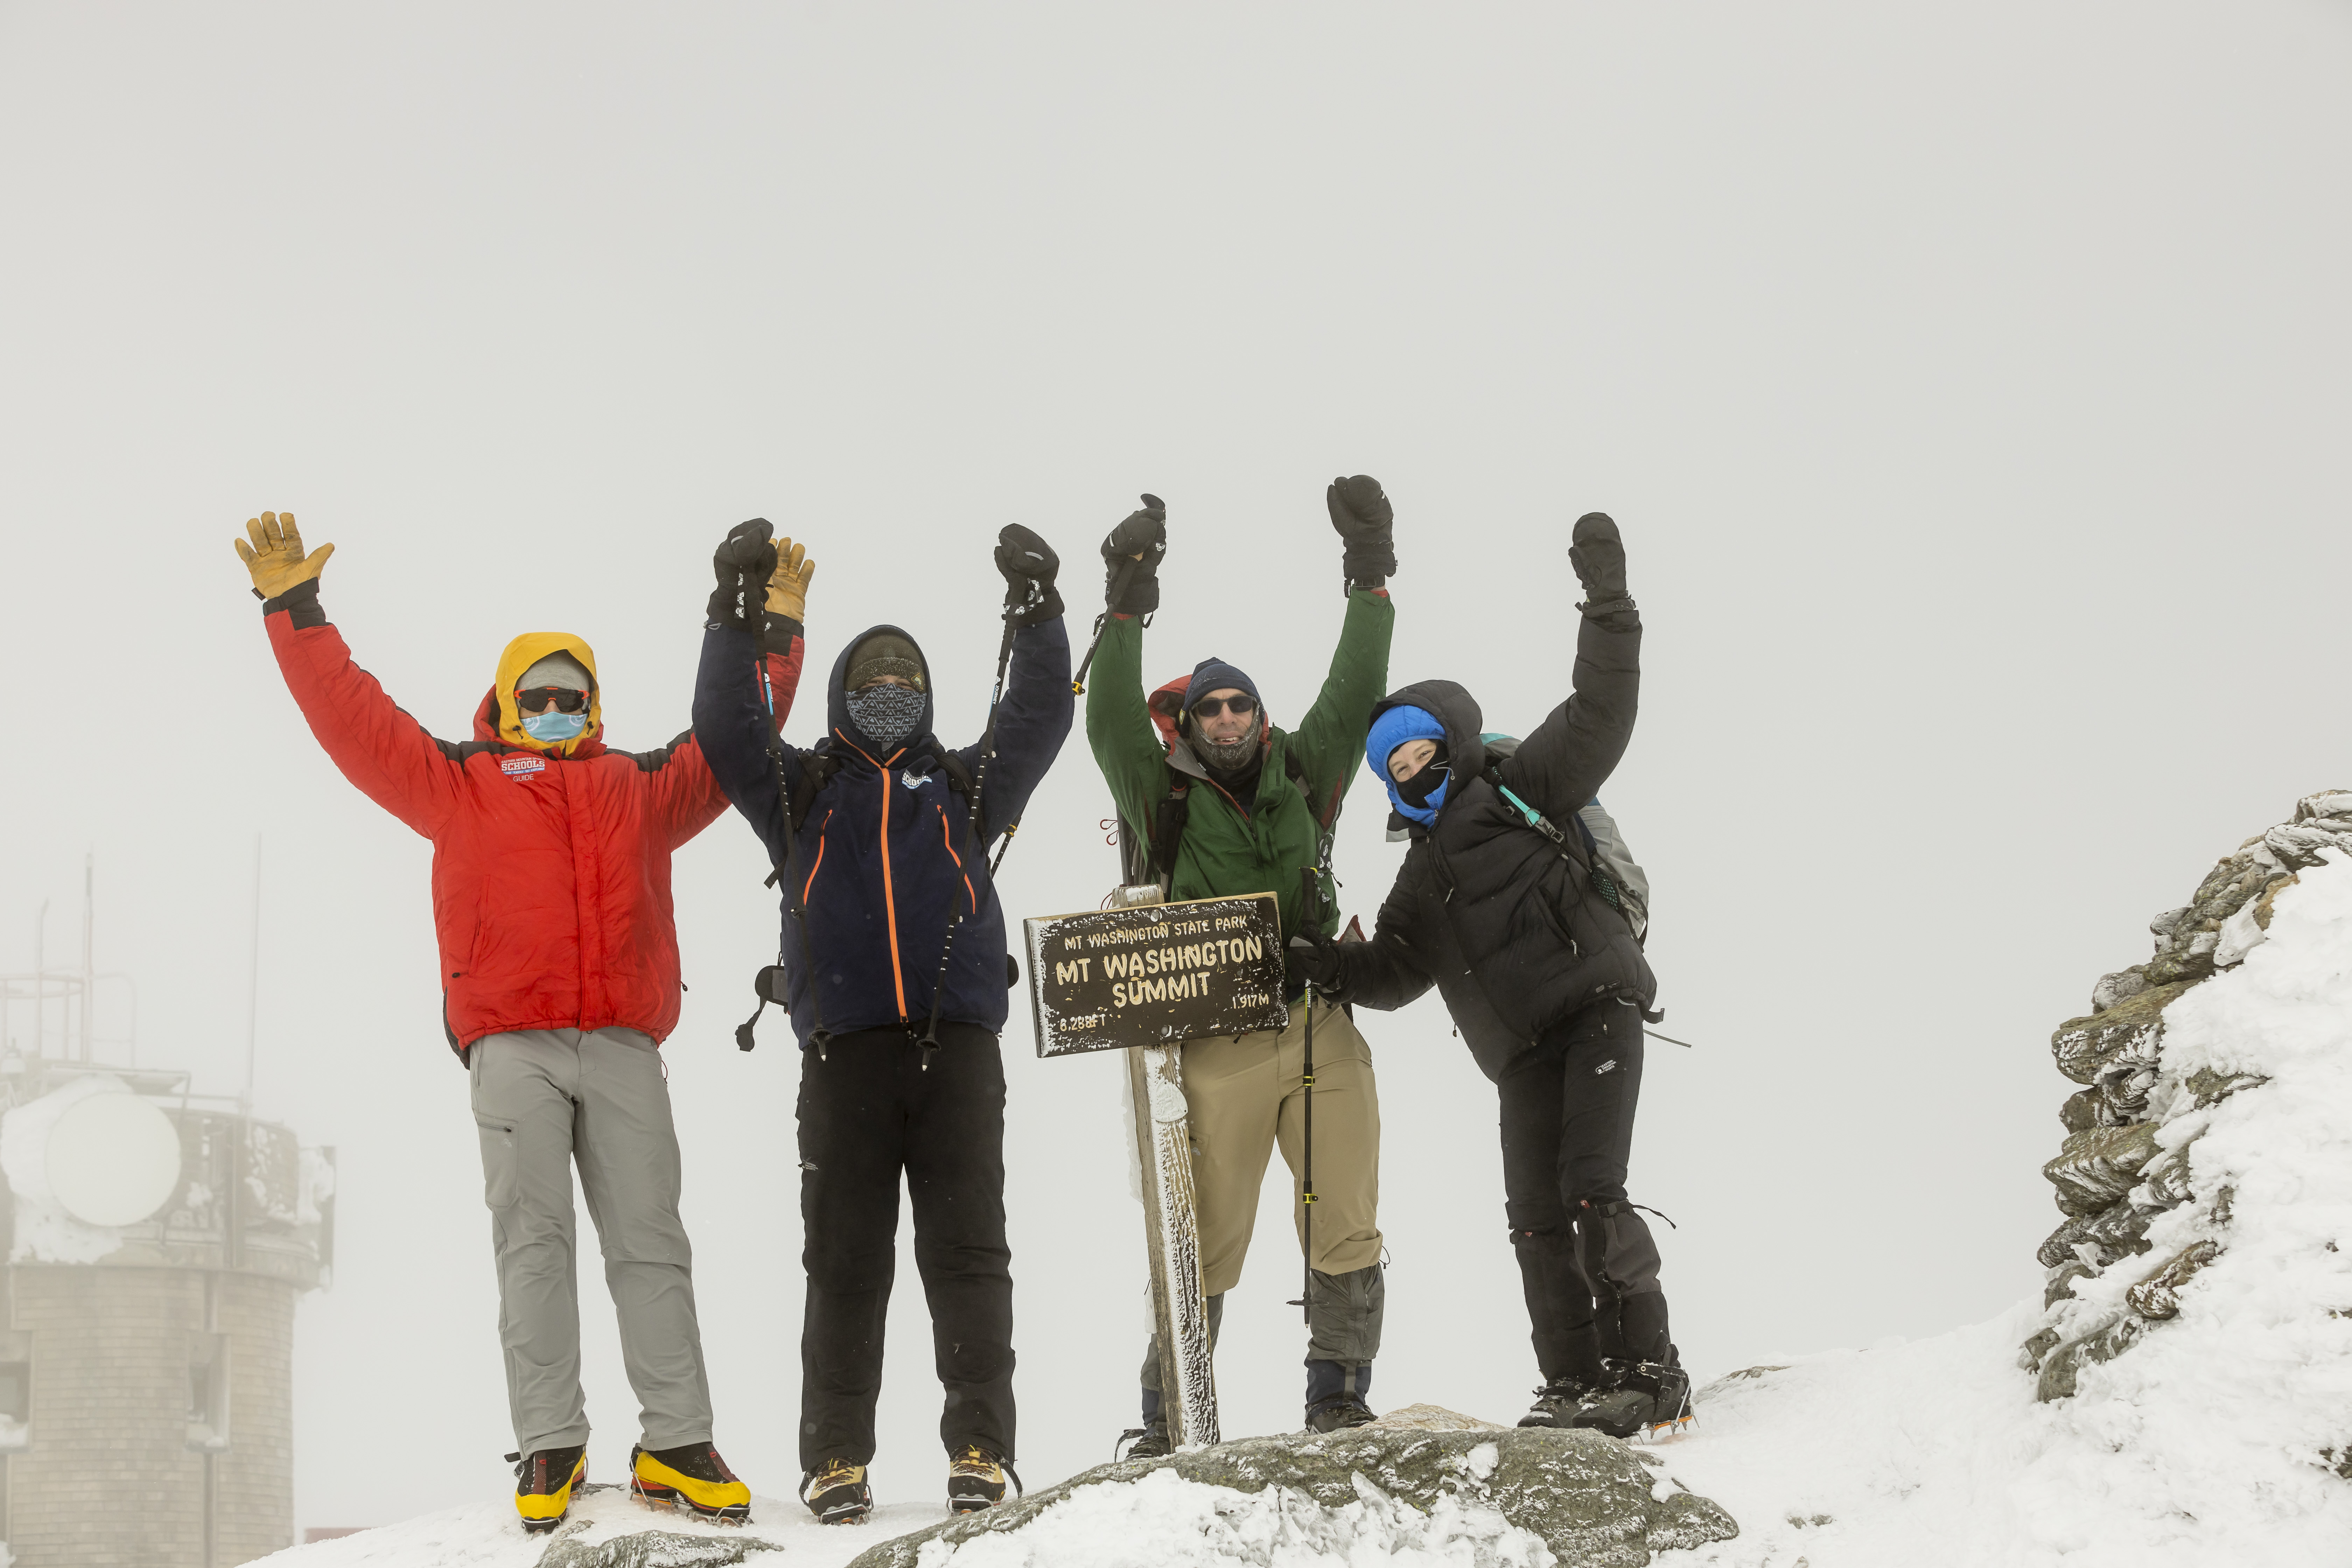 Successful summit of Mount Washington 